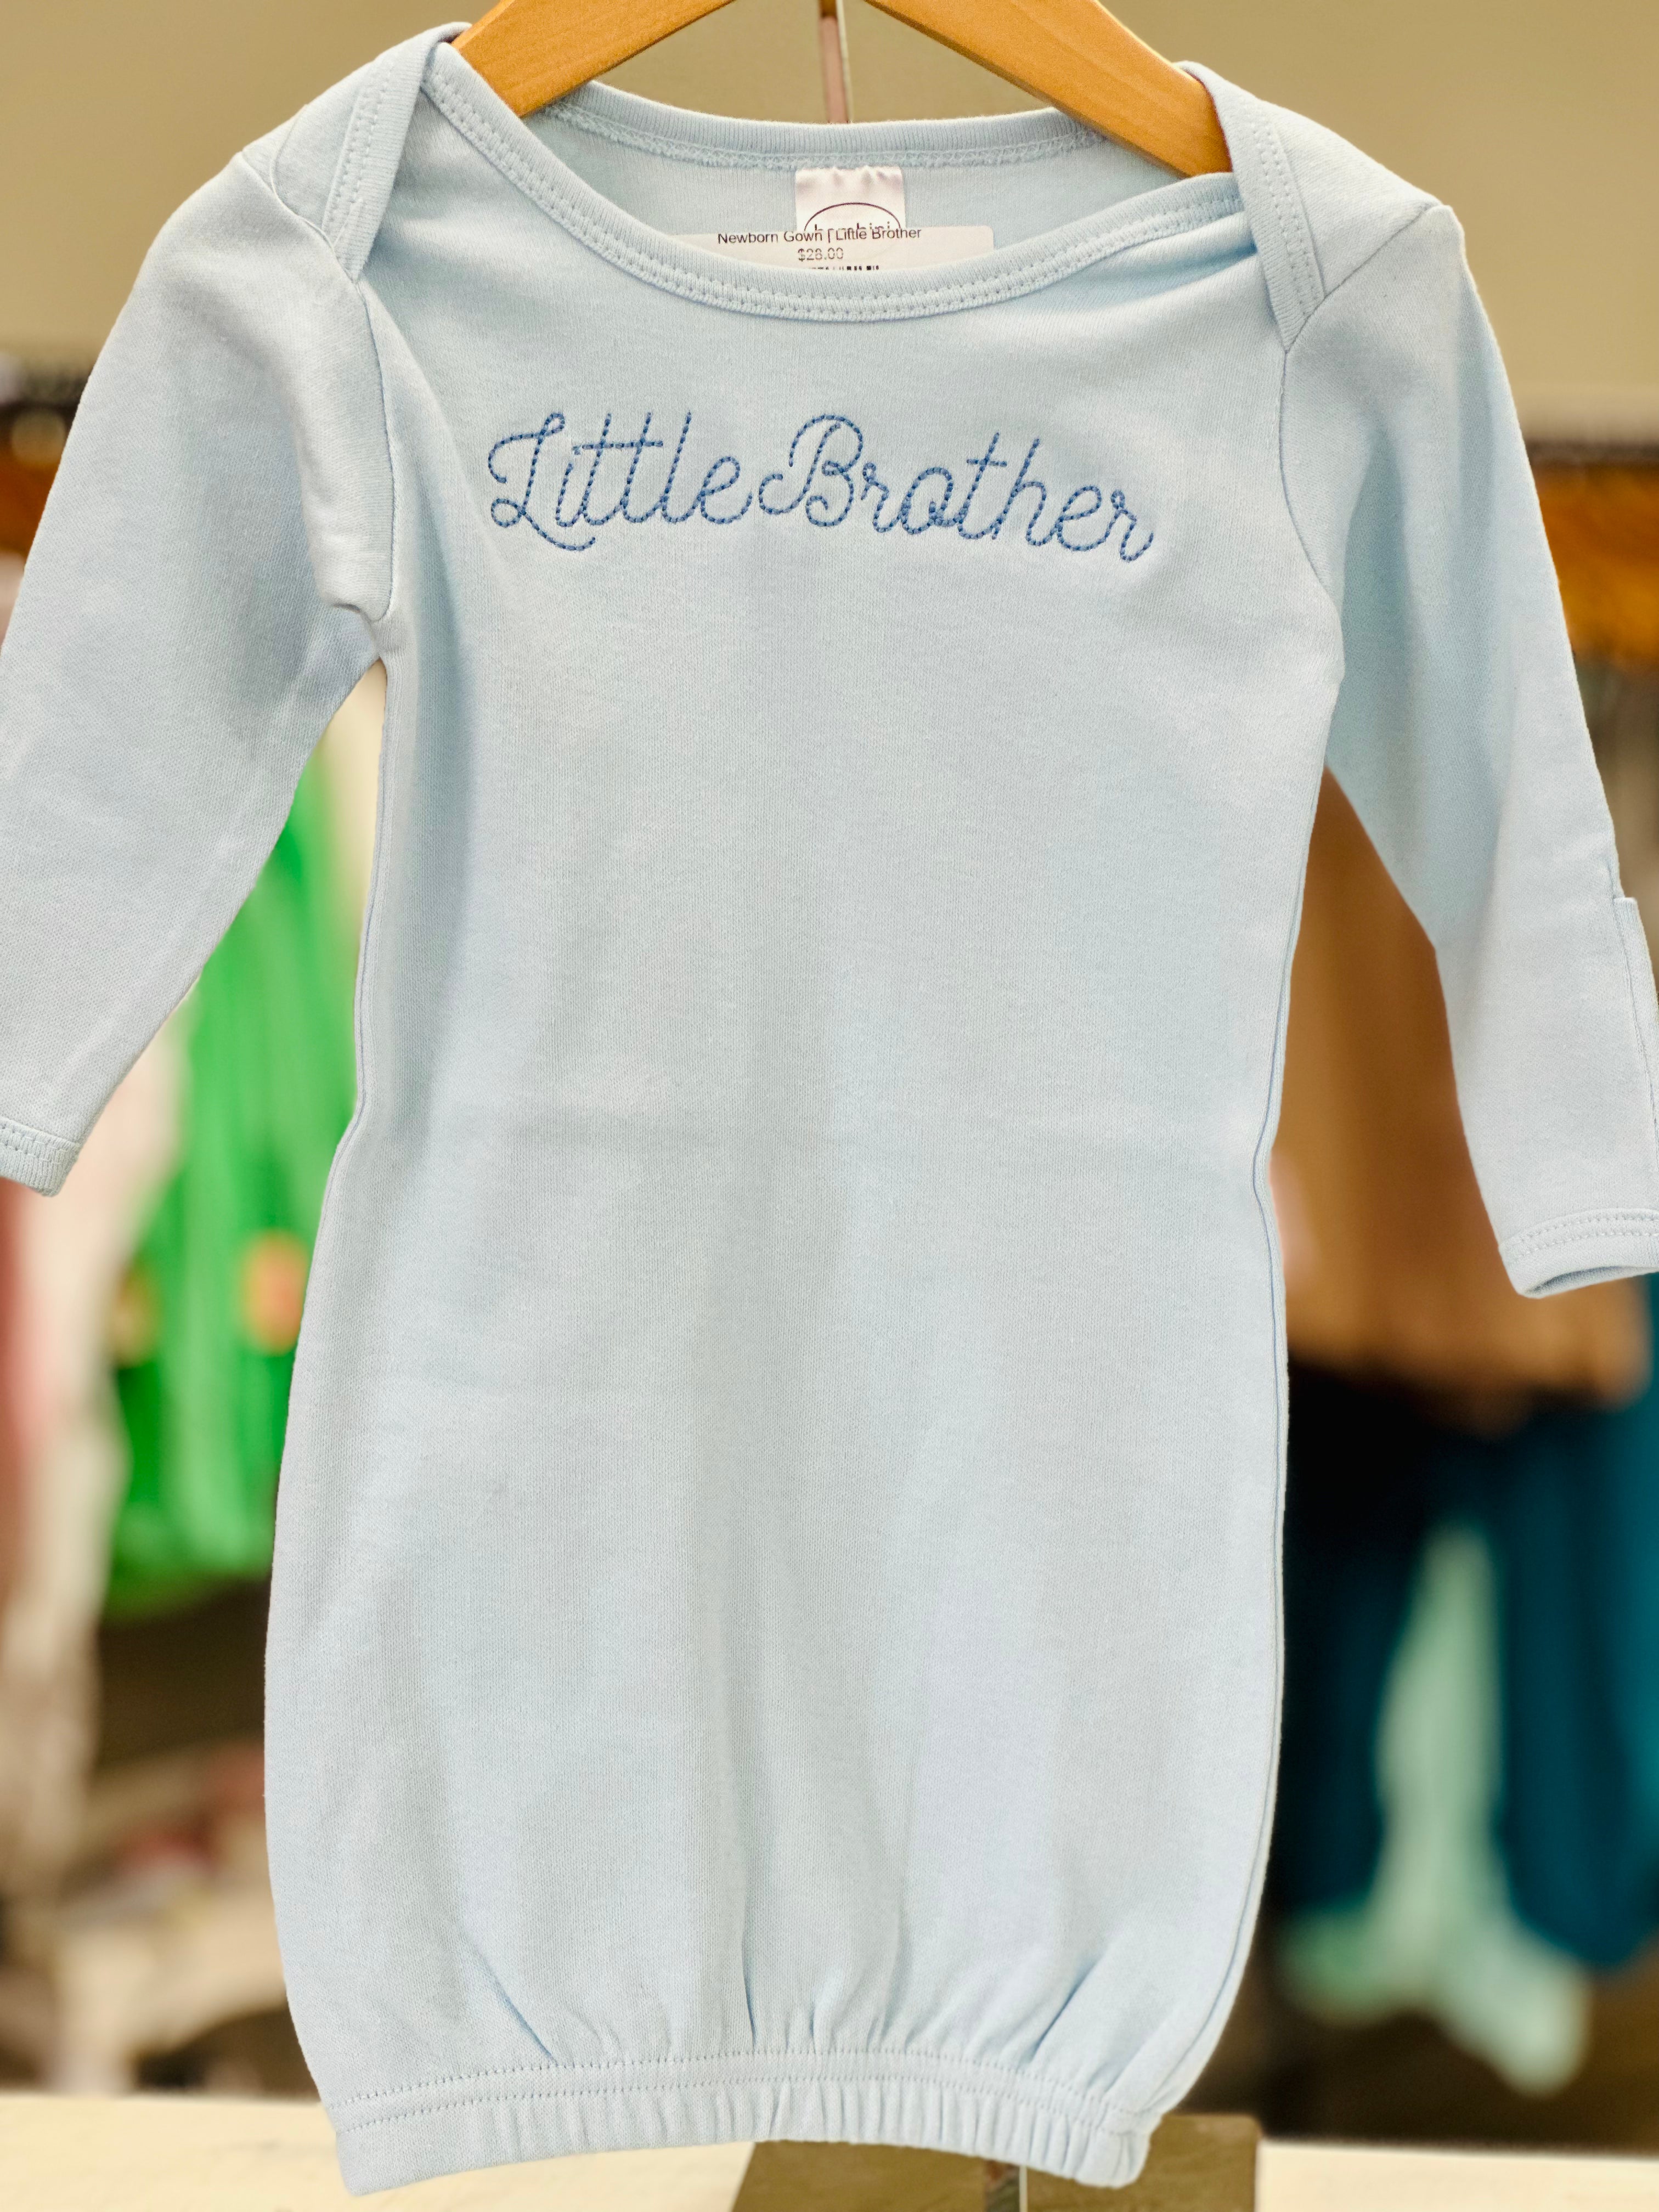 Newborn Gown | Little Brother